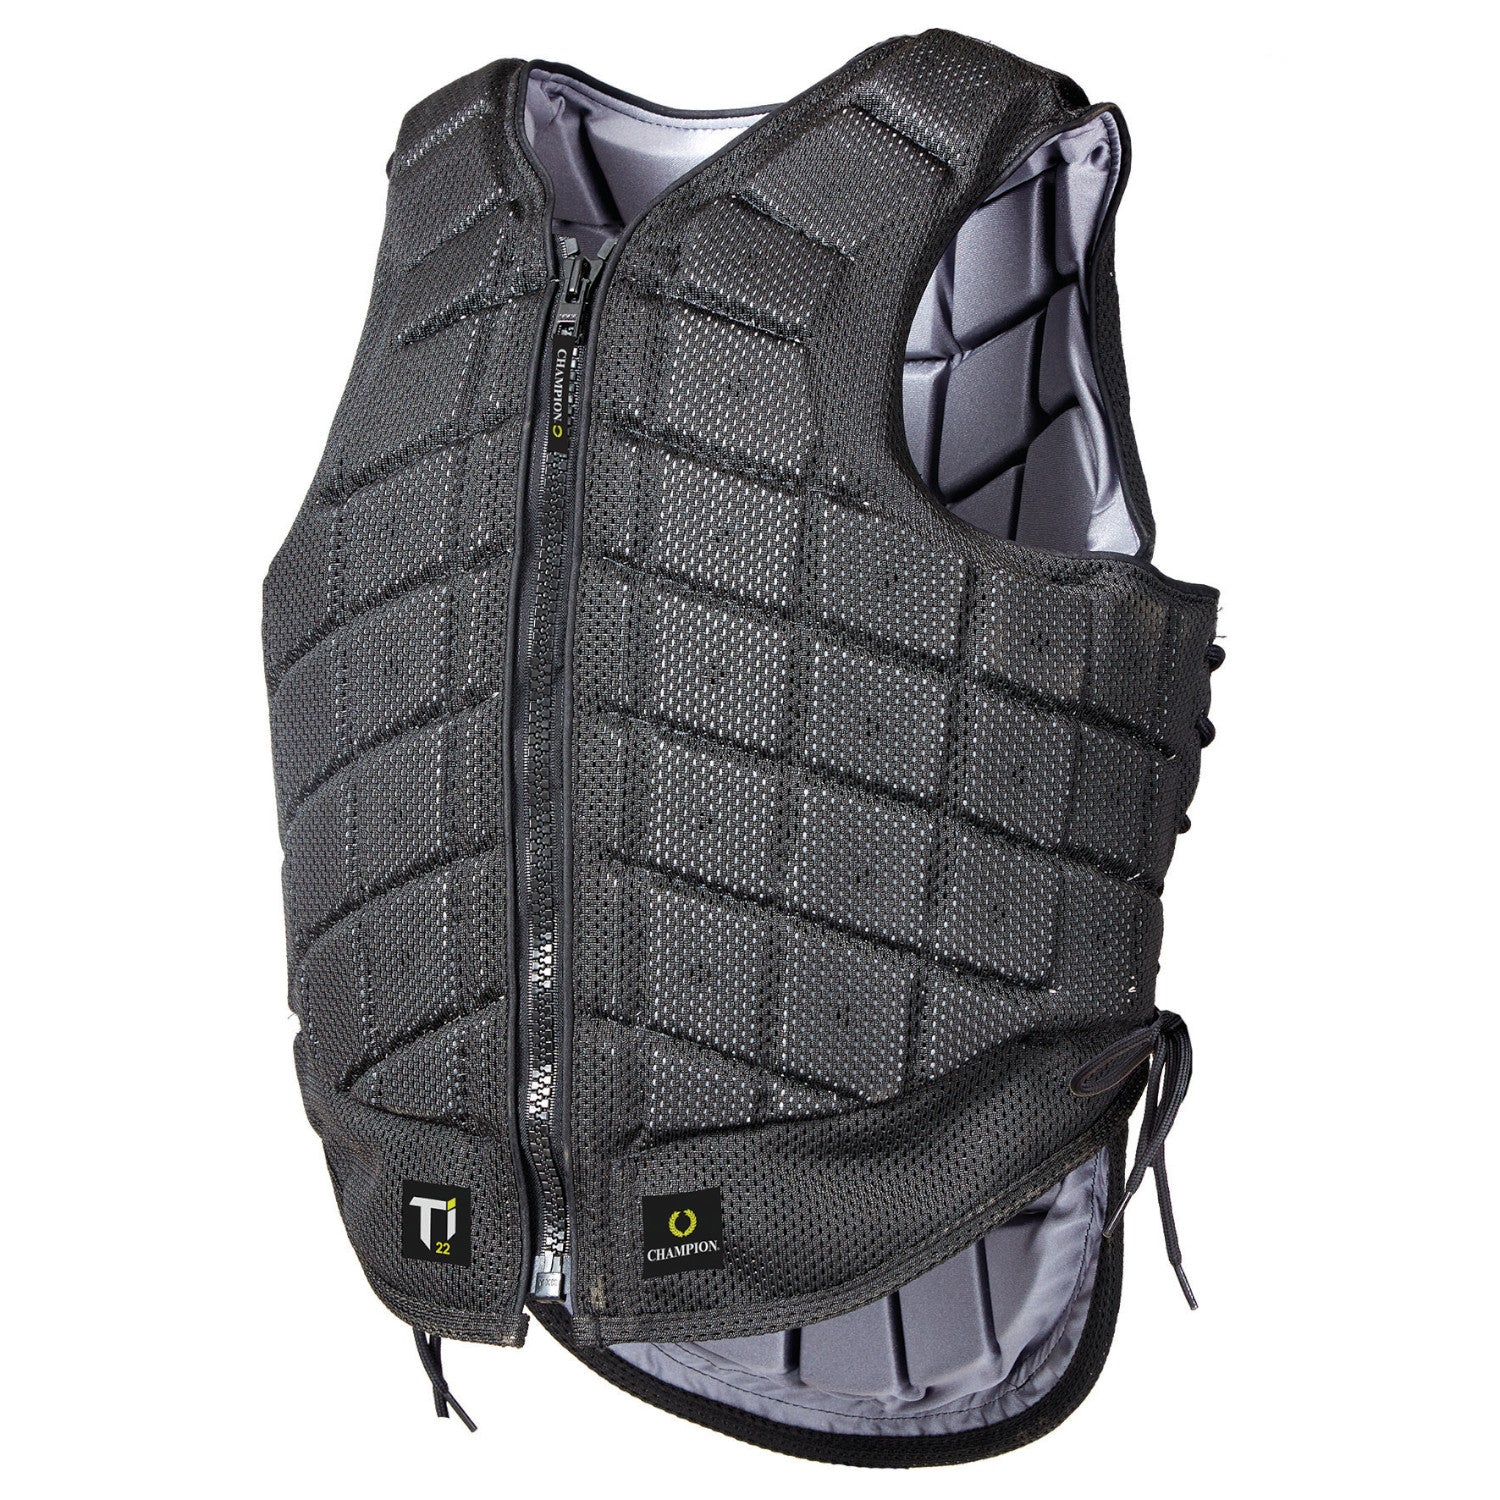 Champion Ti22 Adult Body Protector Vest